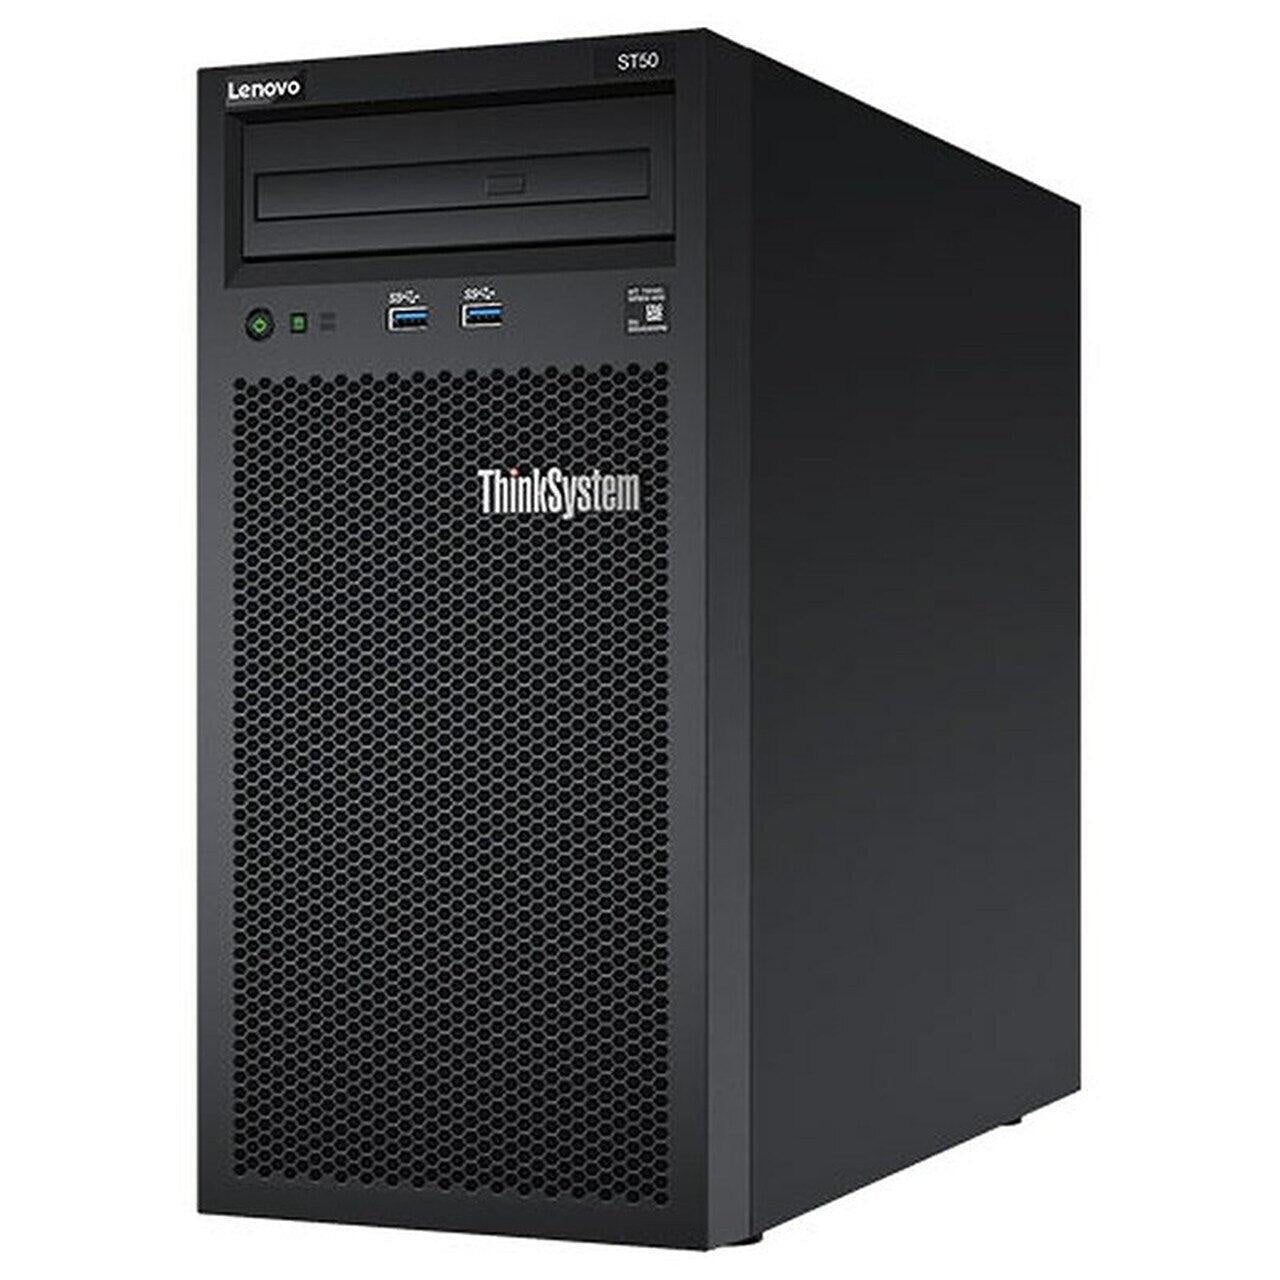 LENOVO ThinkSystem ST50 4U Tower Server, 1 x E-2226G 3.4Ghz, 1 x 8GB 1Rx8, SW RD, 1 x Fixed 250w PSU. 2 x 3.5' Non HS HDD, 3 Year Warranty LENOVO